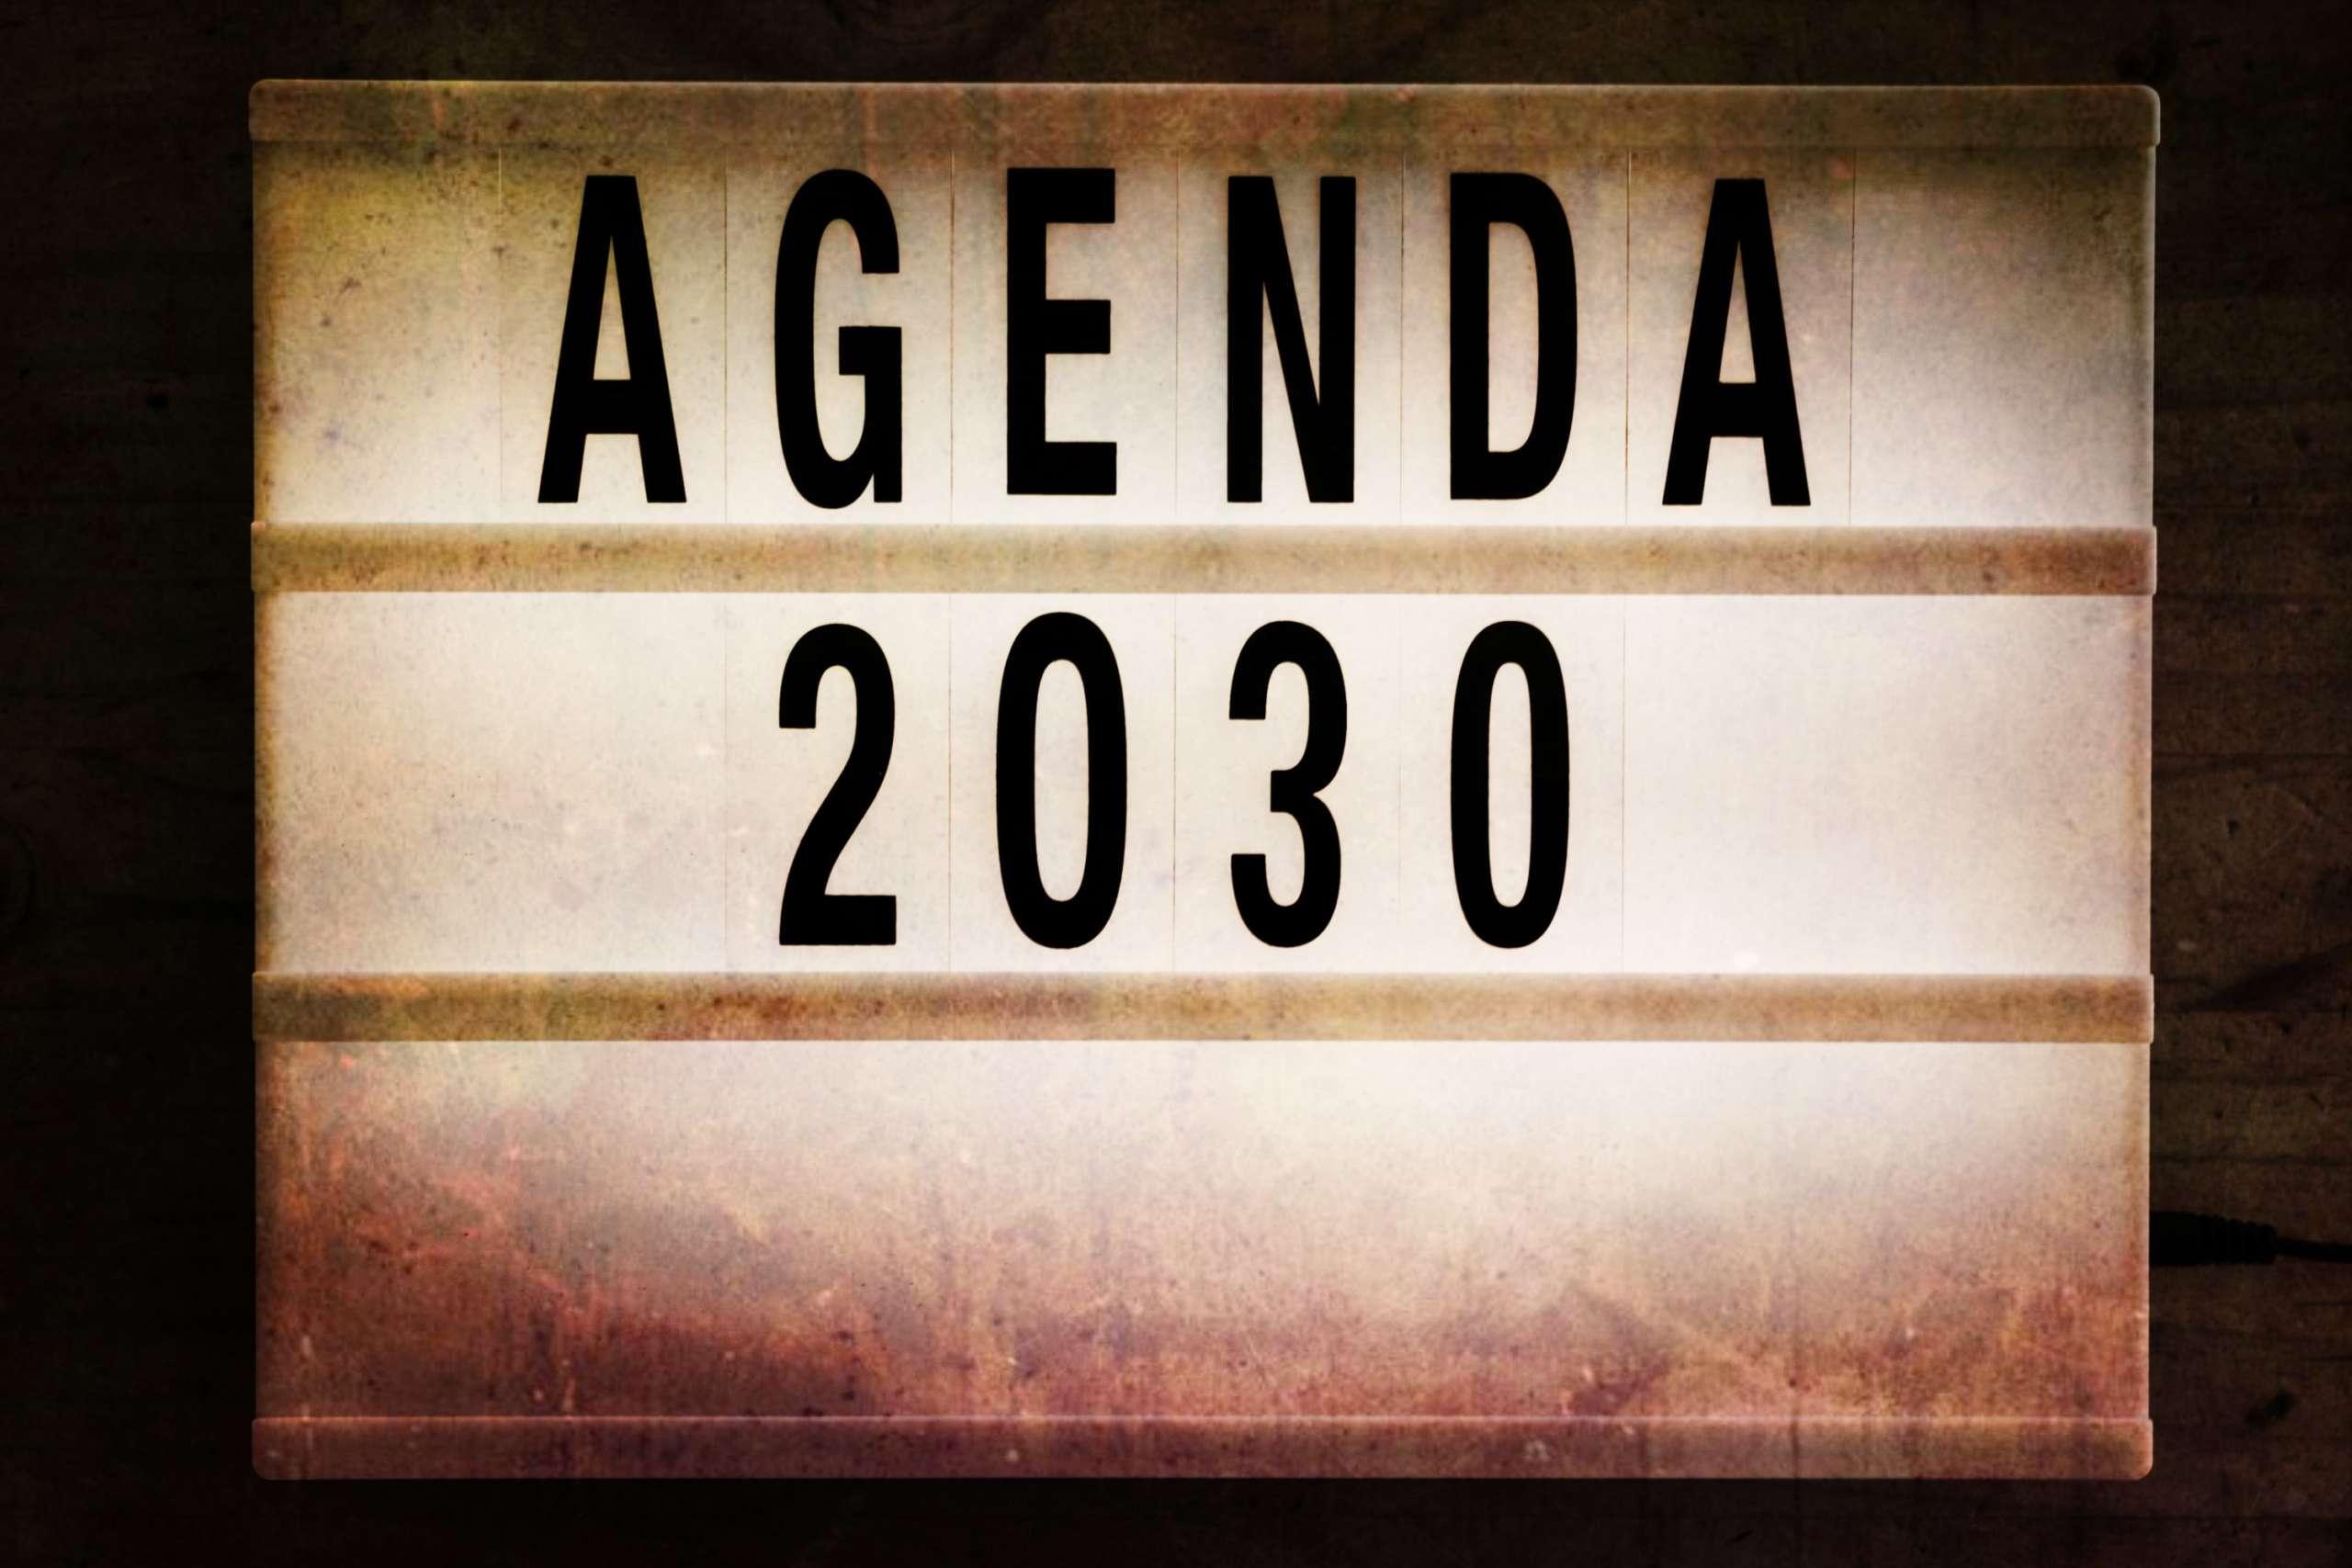 Agenda 2030 im Lightbox-Design mit dunklem Grunge-Feeling